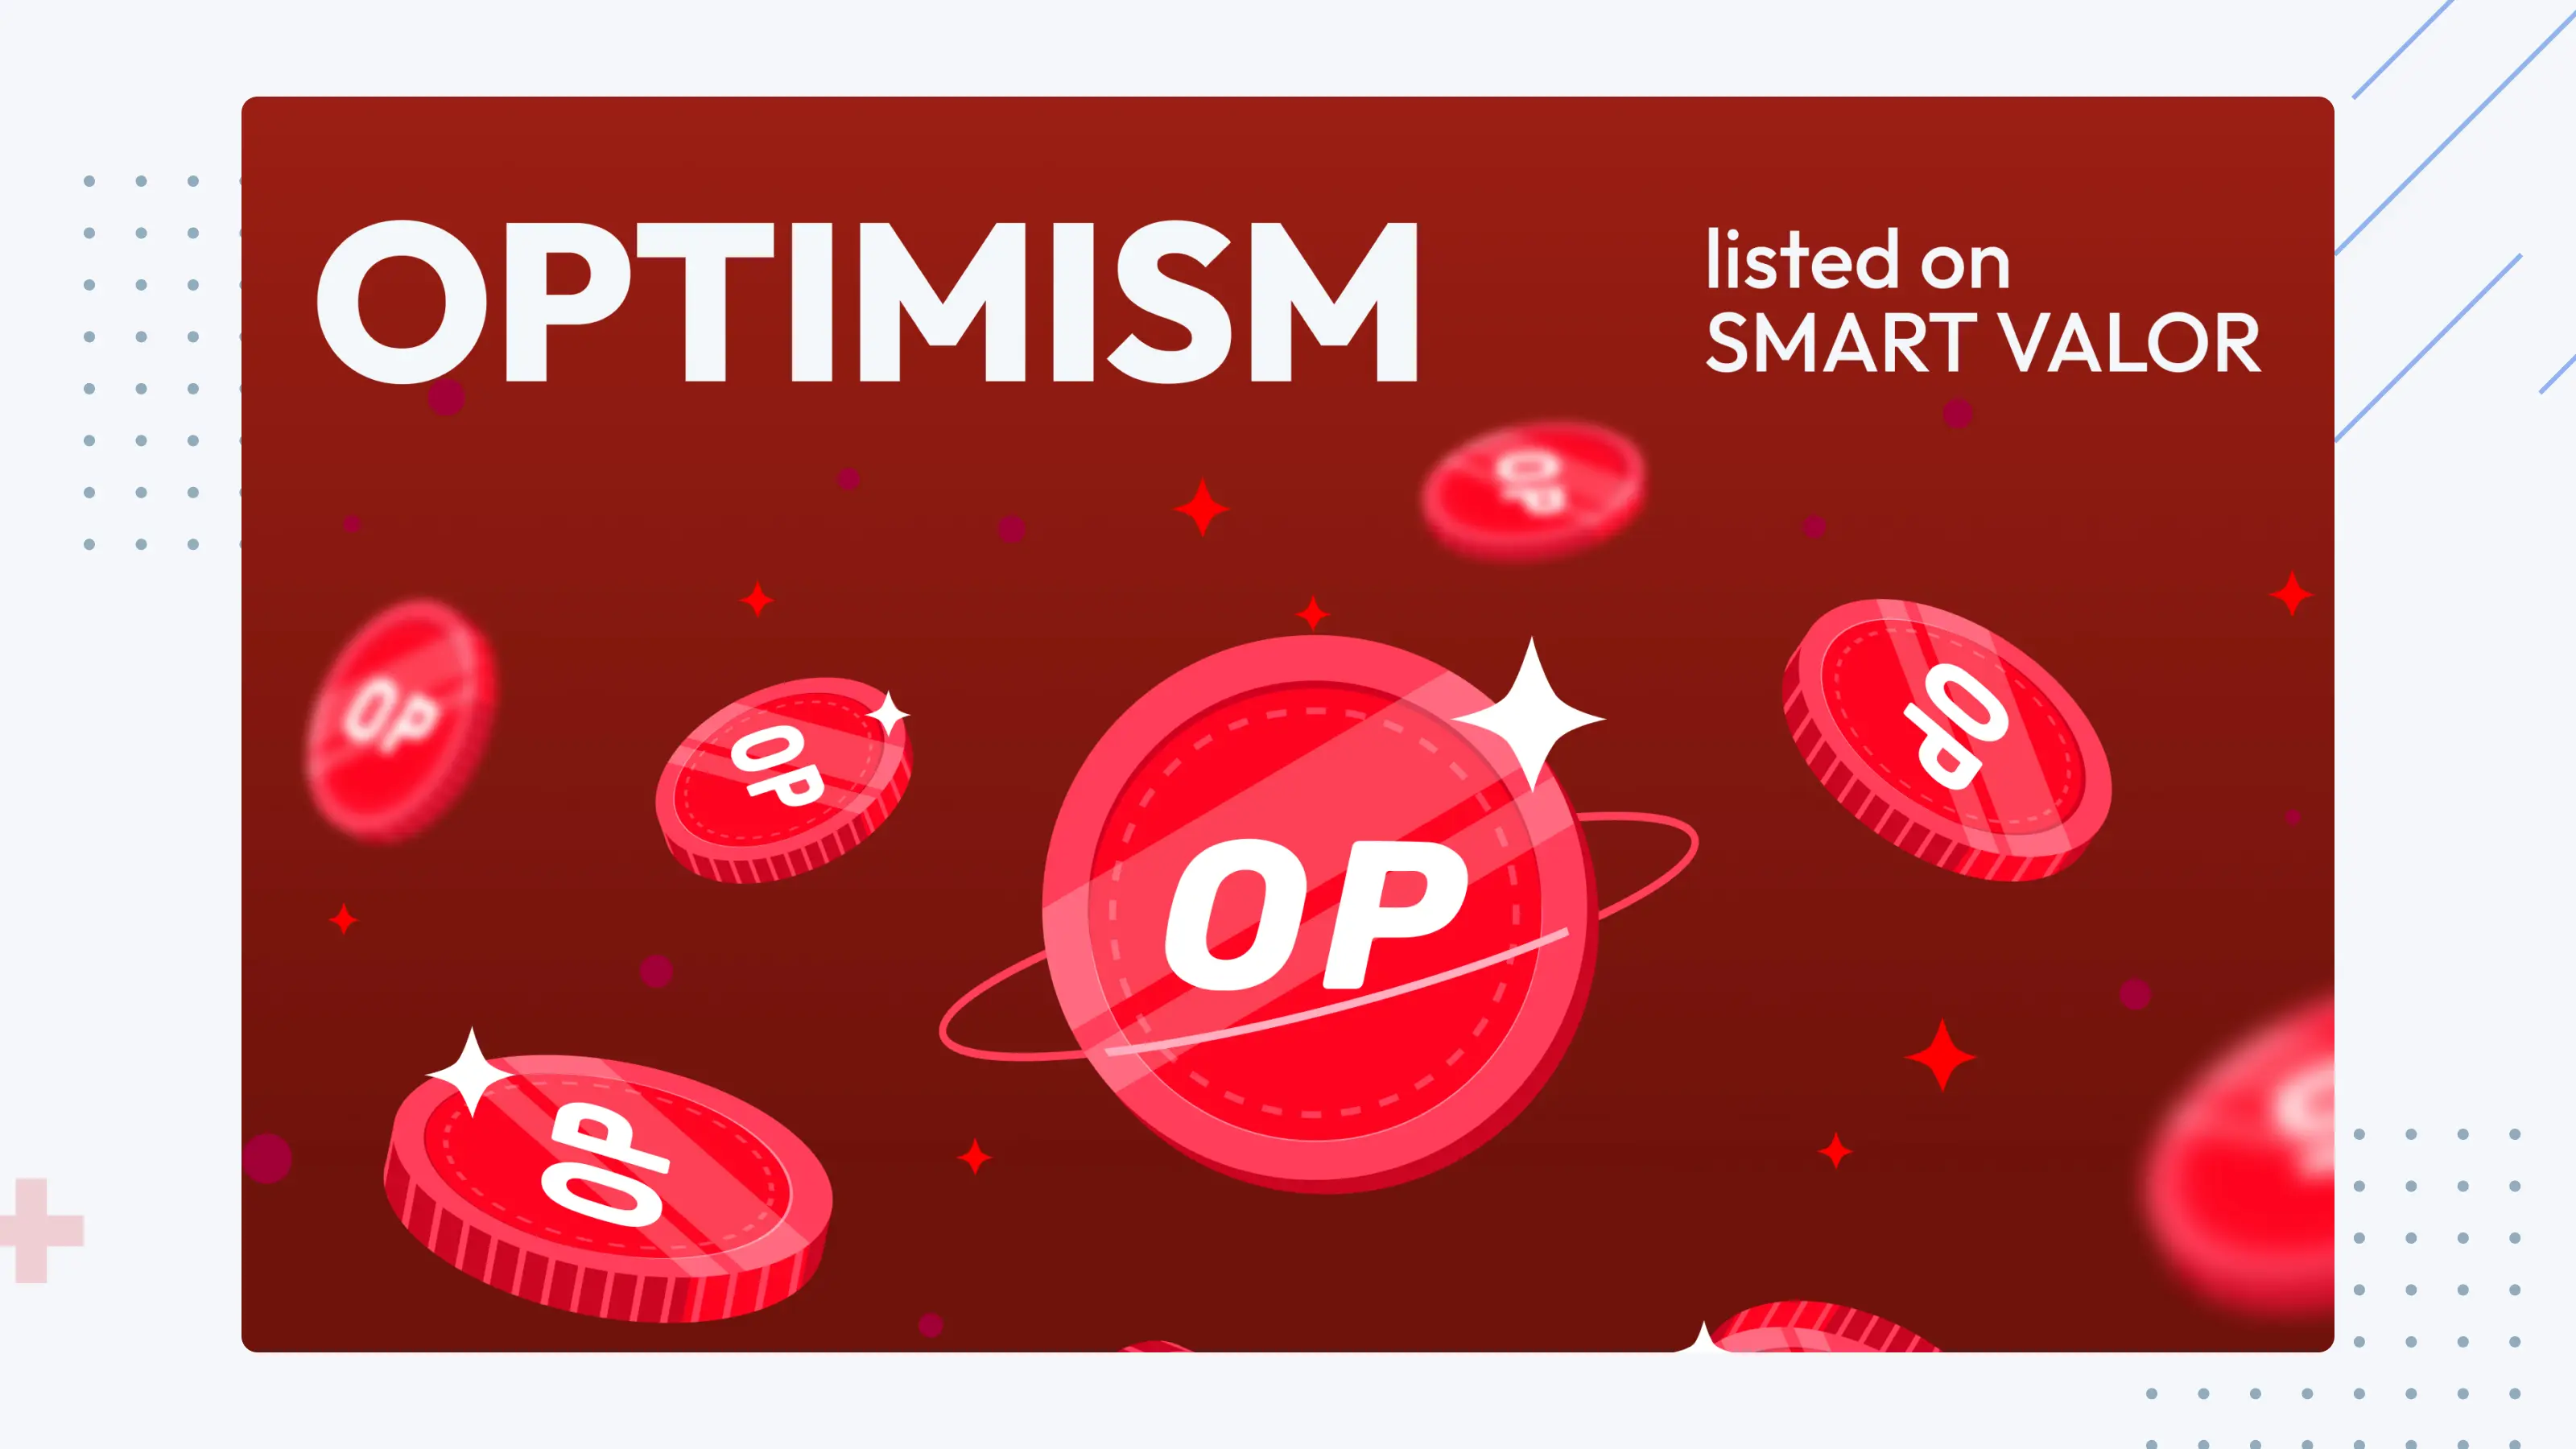 ETH and OP deposits and withdrawals now available on Optimism! - Kraken Blog Kraken Blog